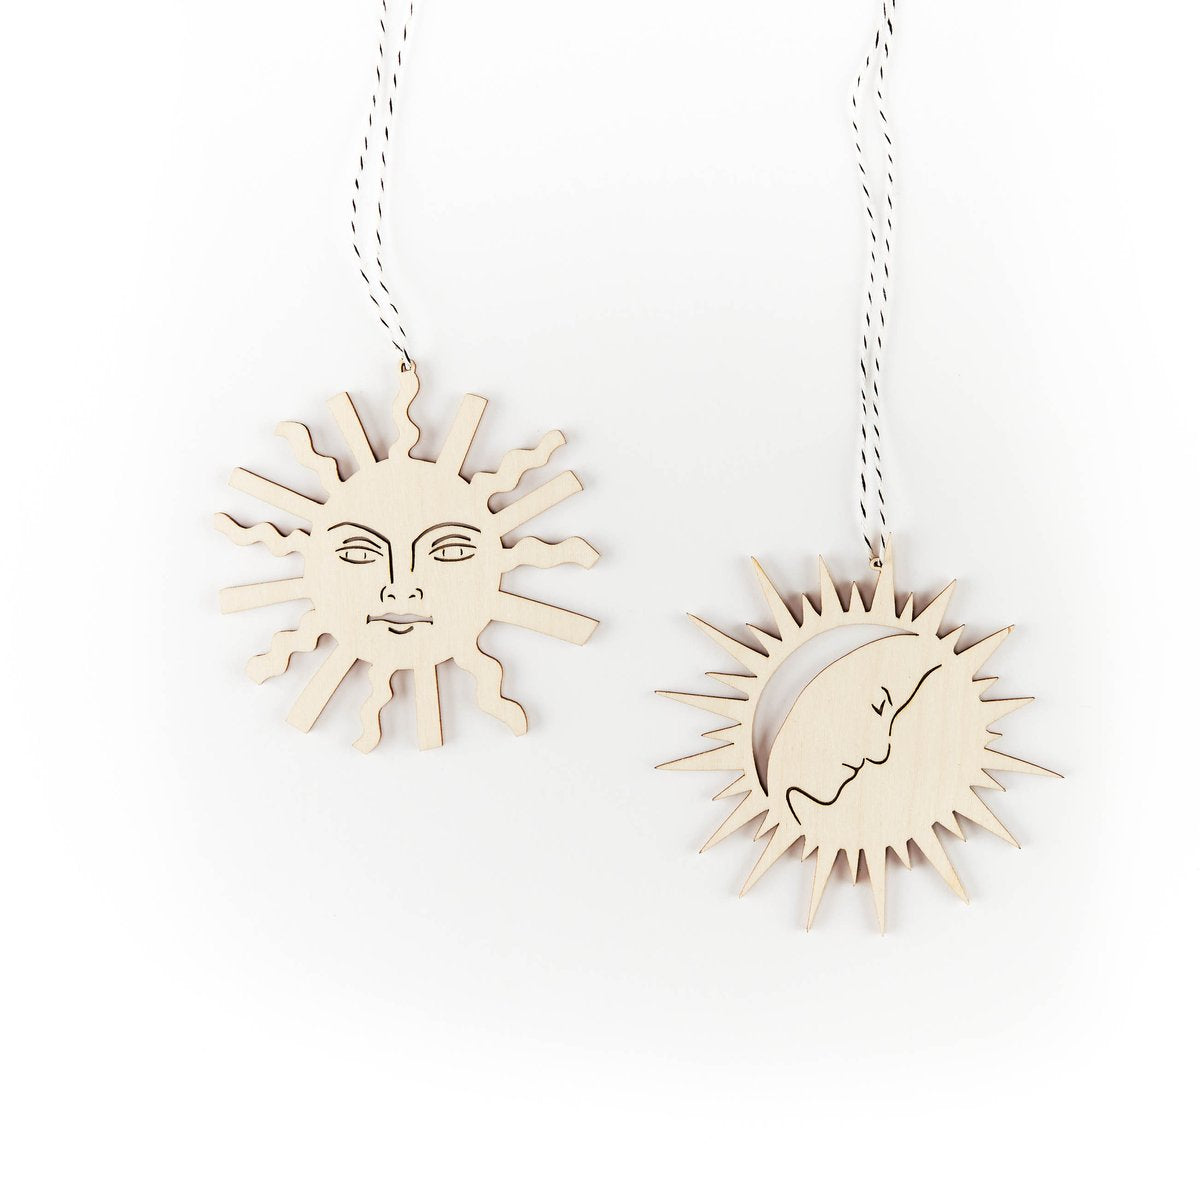 Tarot Sun and Moon Ornament Set